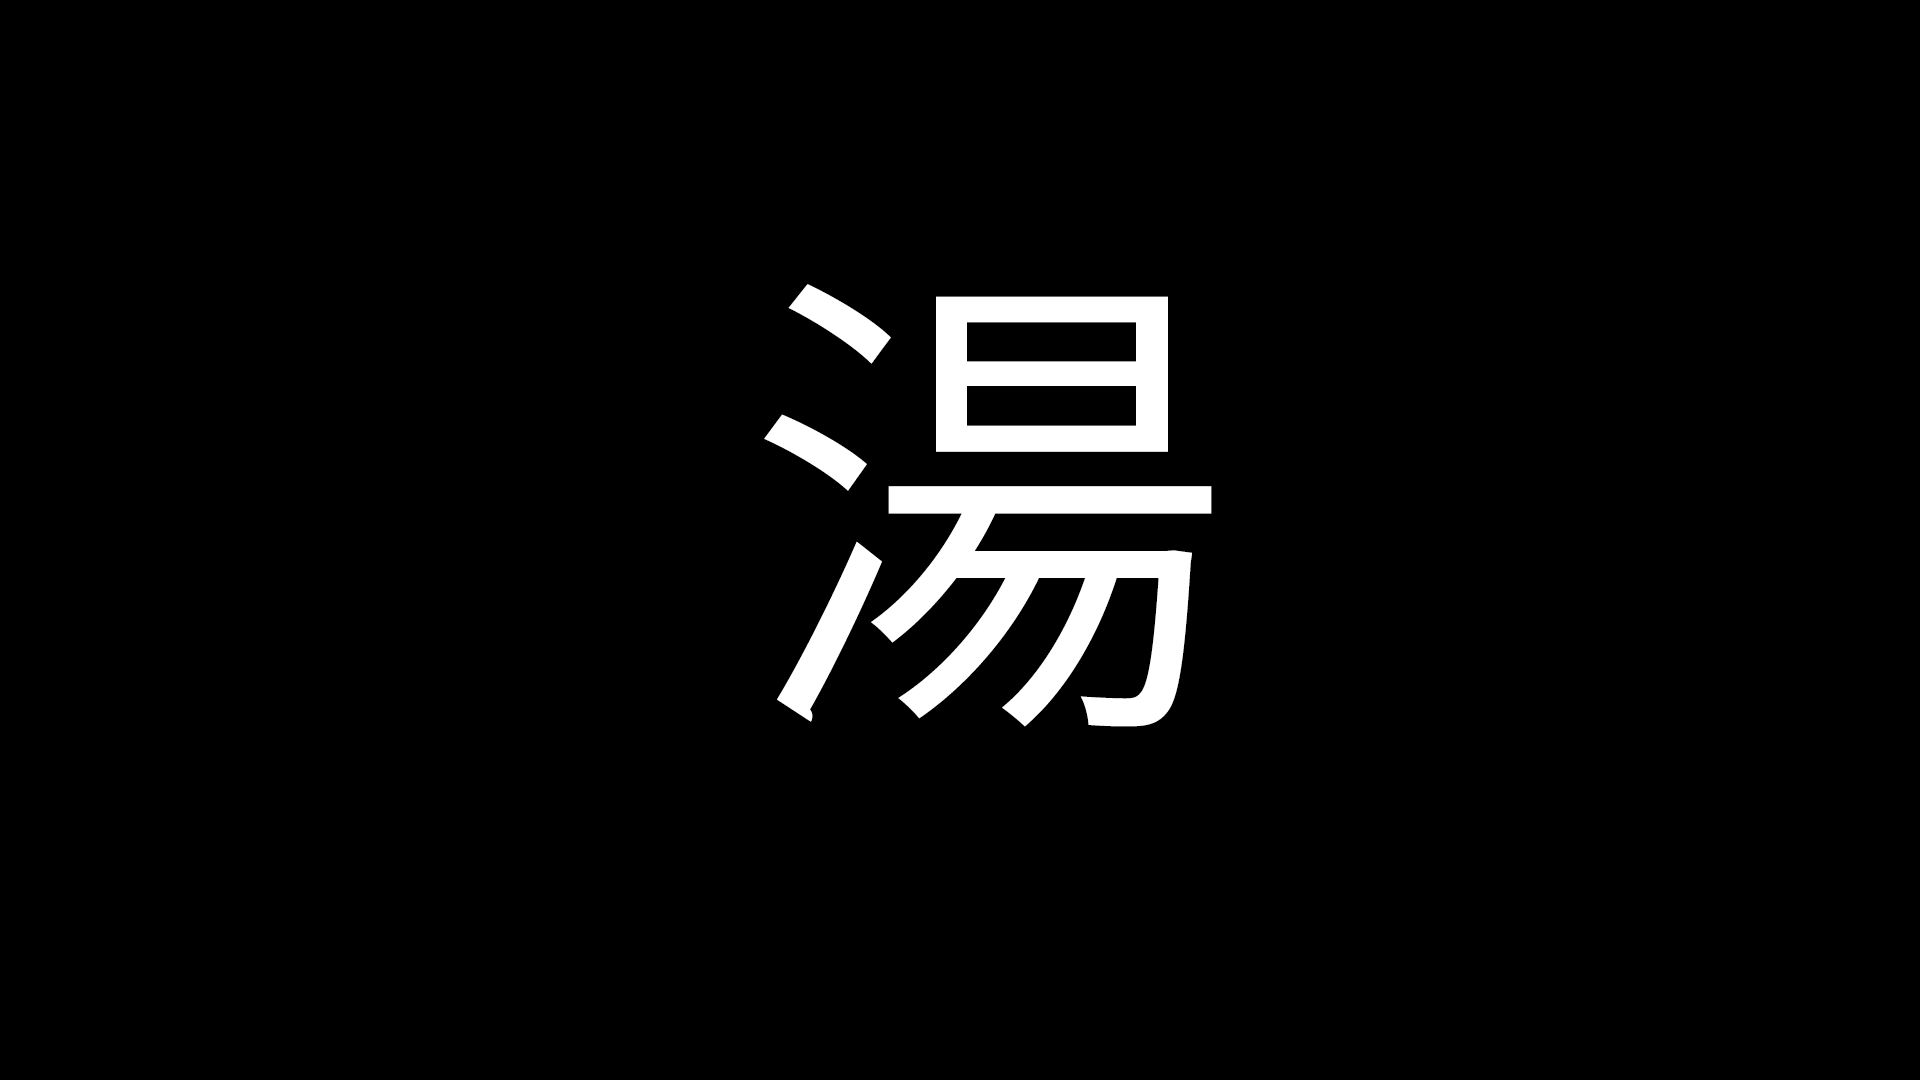 General 1920x1080 kanji black background simple background minimalism